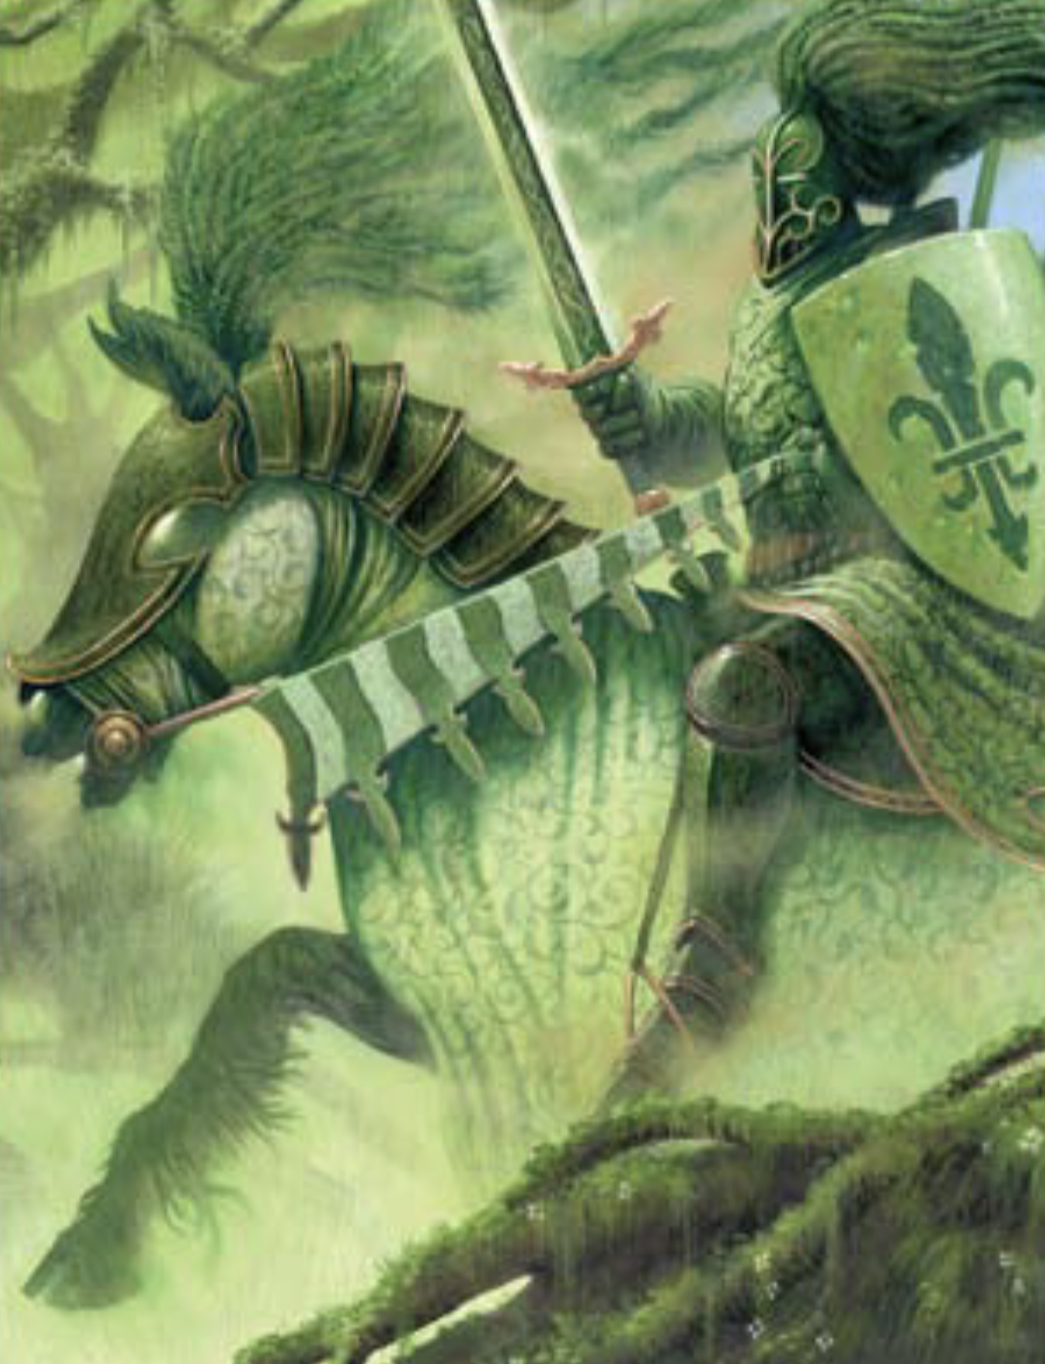 Green Knight - Wikipedia